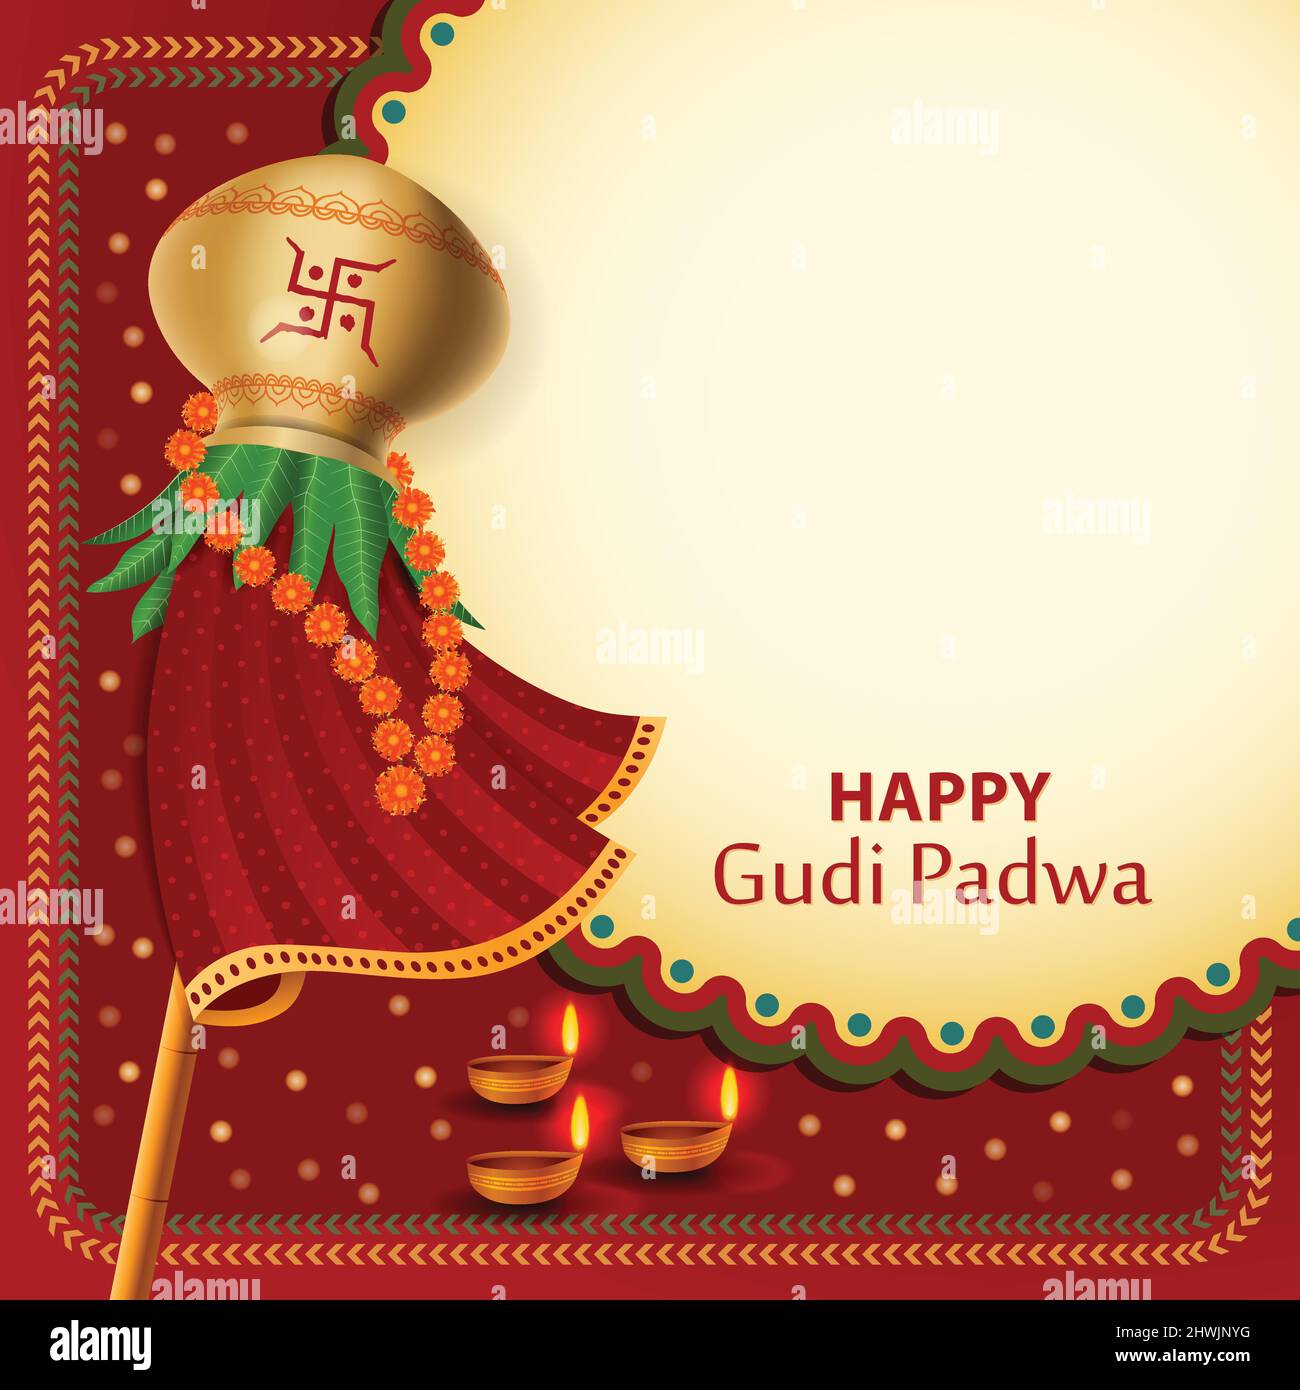 Happy Gudi Padwa Hindu Festival Greeting Card Background. Creative ...